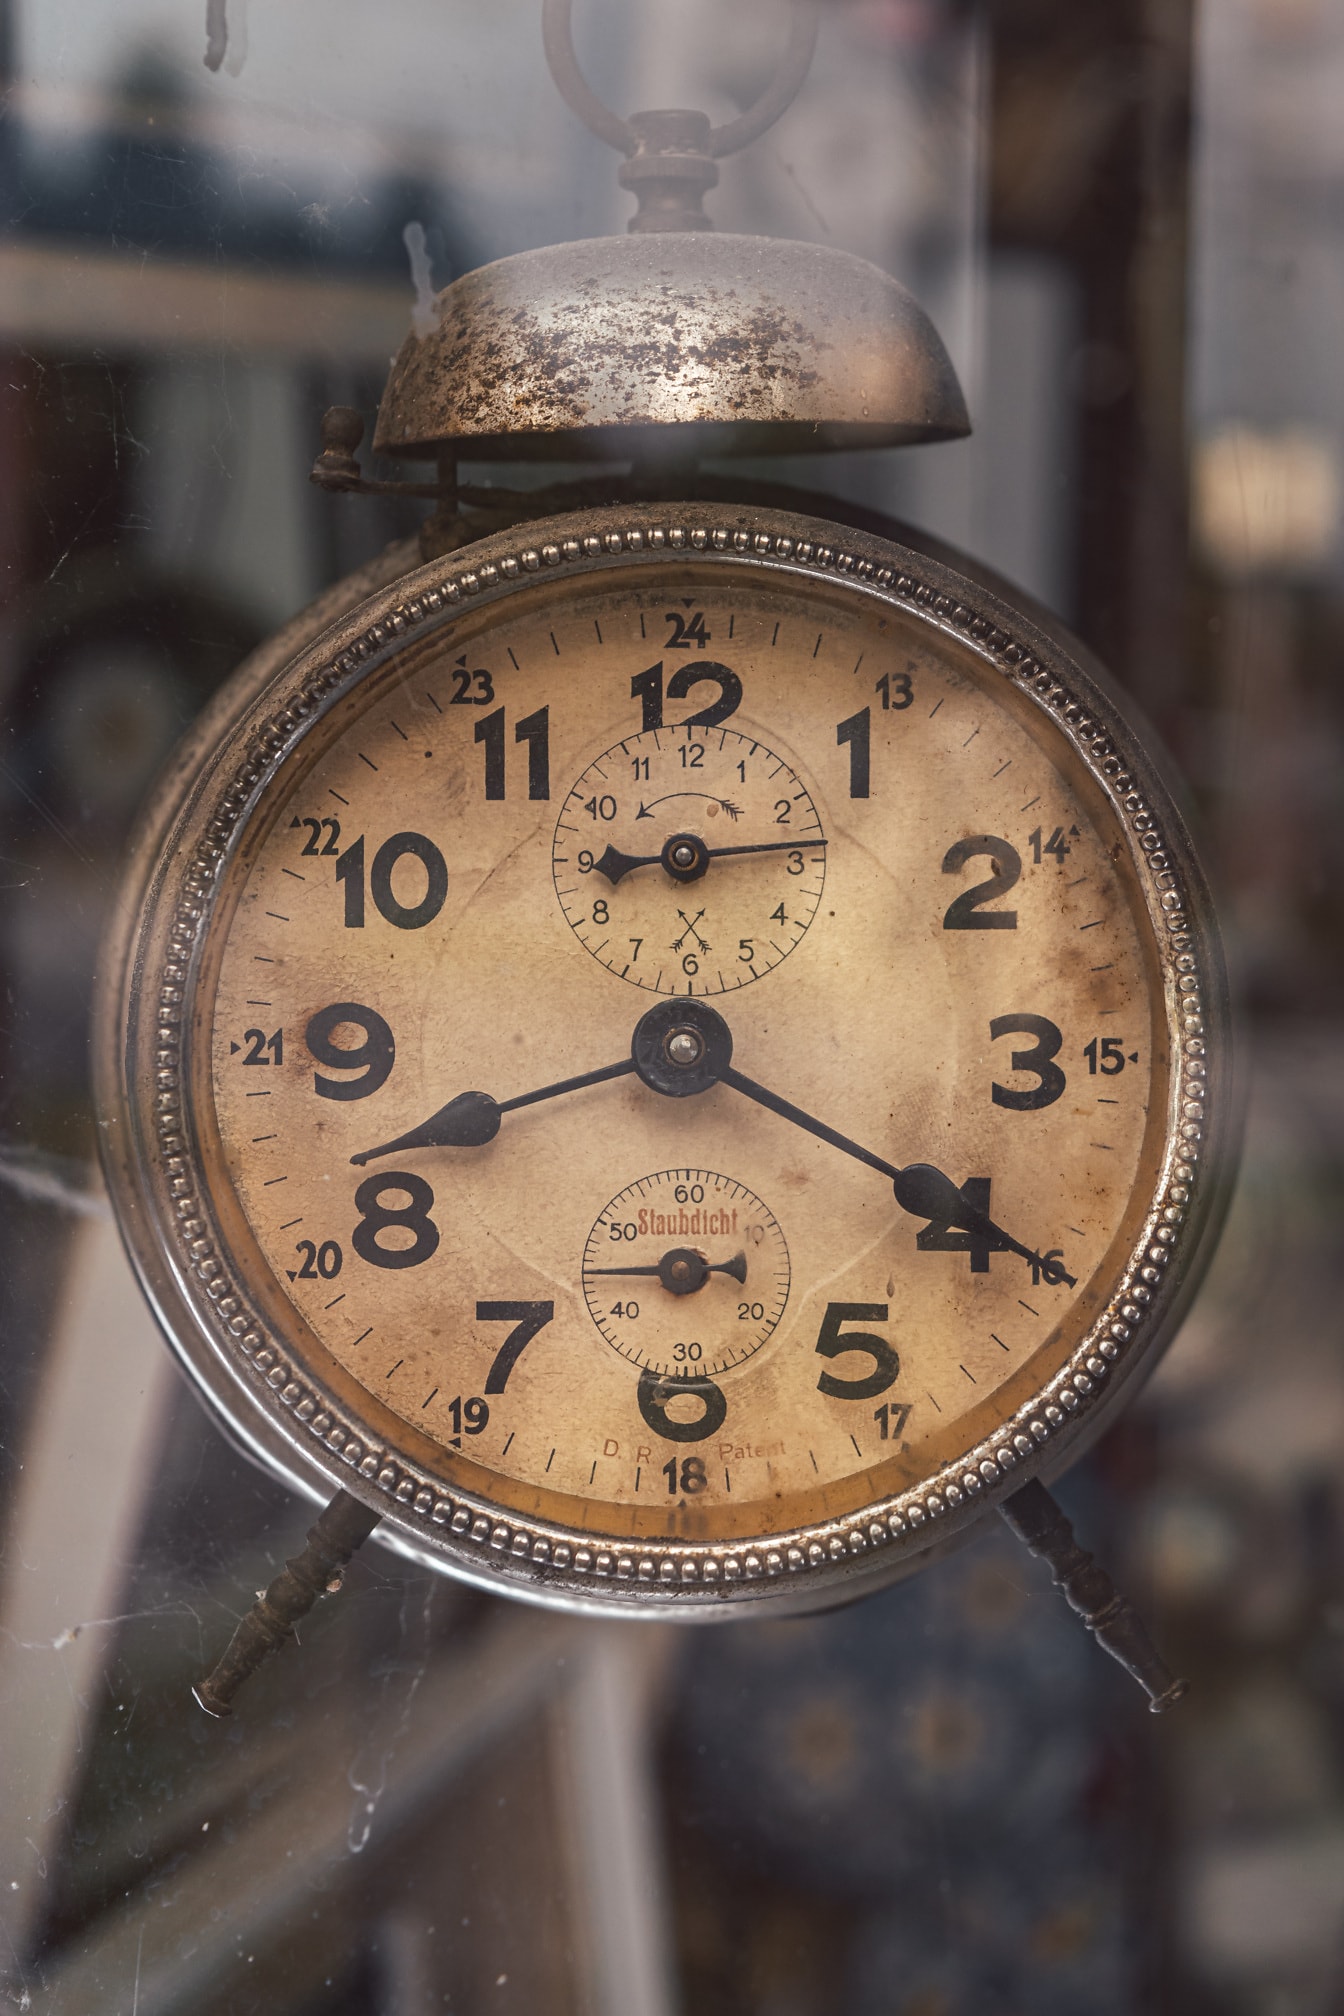 Vintage παλιό ξυπνητήρι Staubdicht αναλογικό ρολόι κοντινό πλάνο